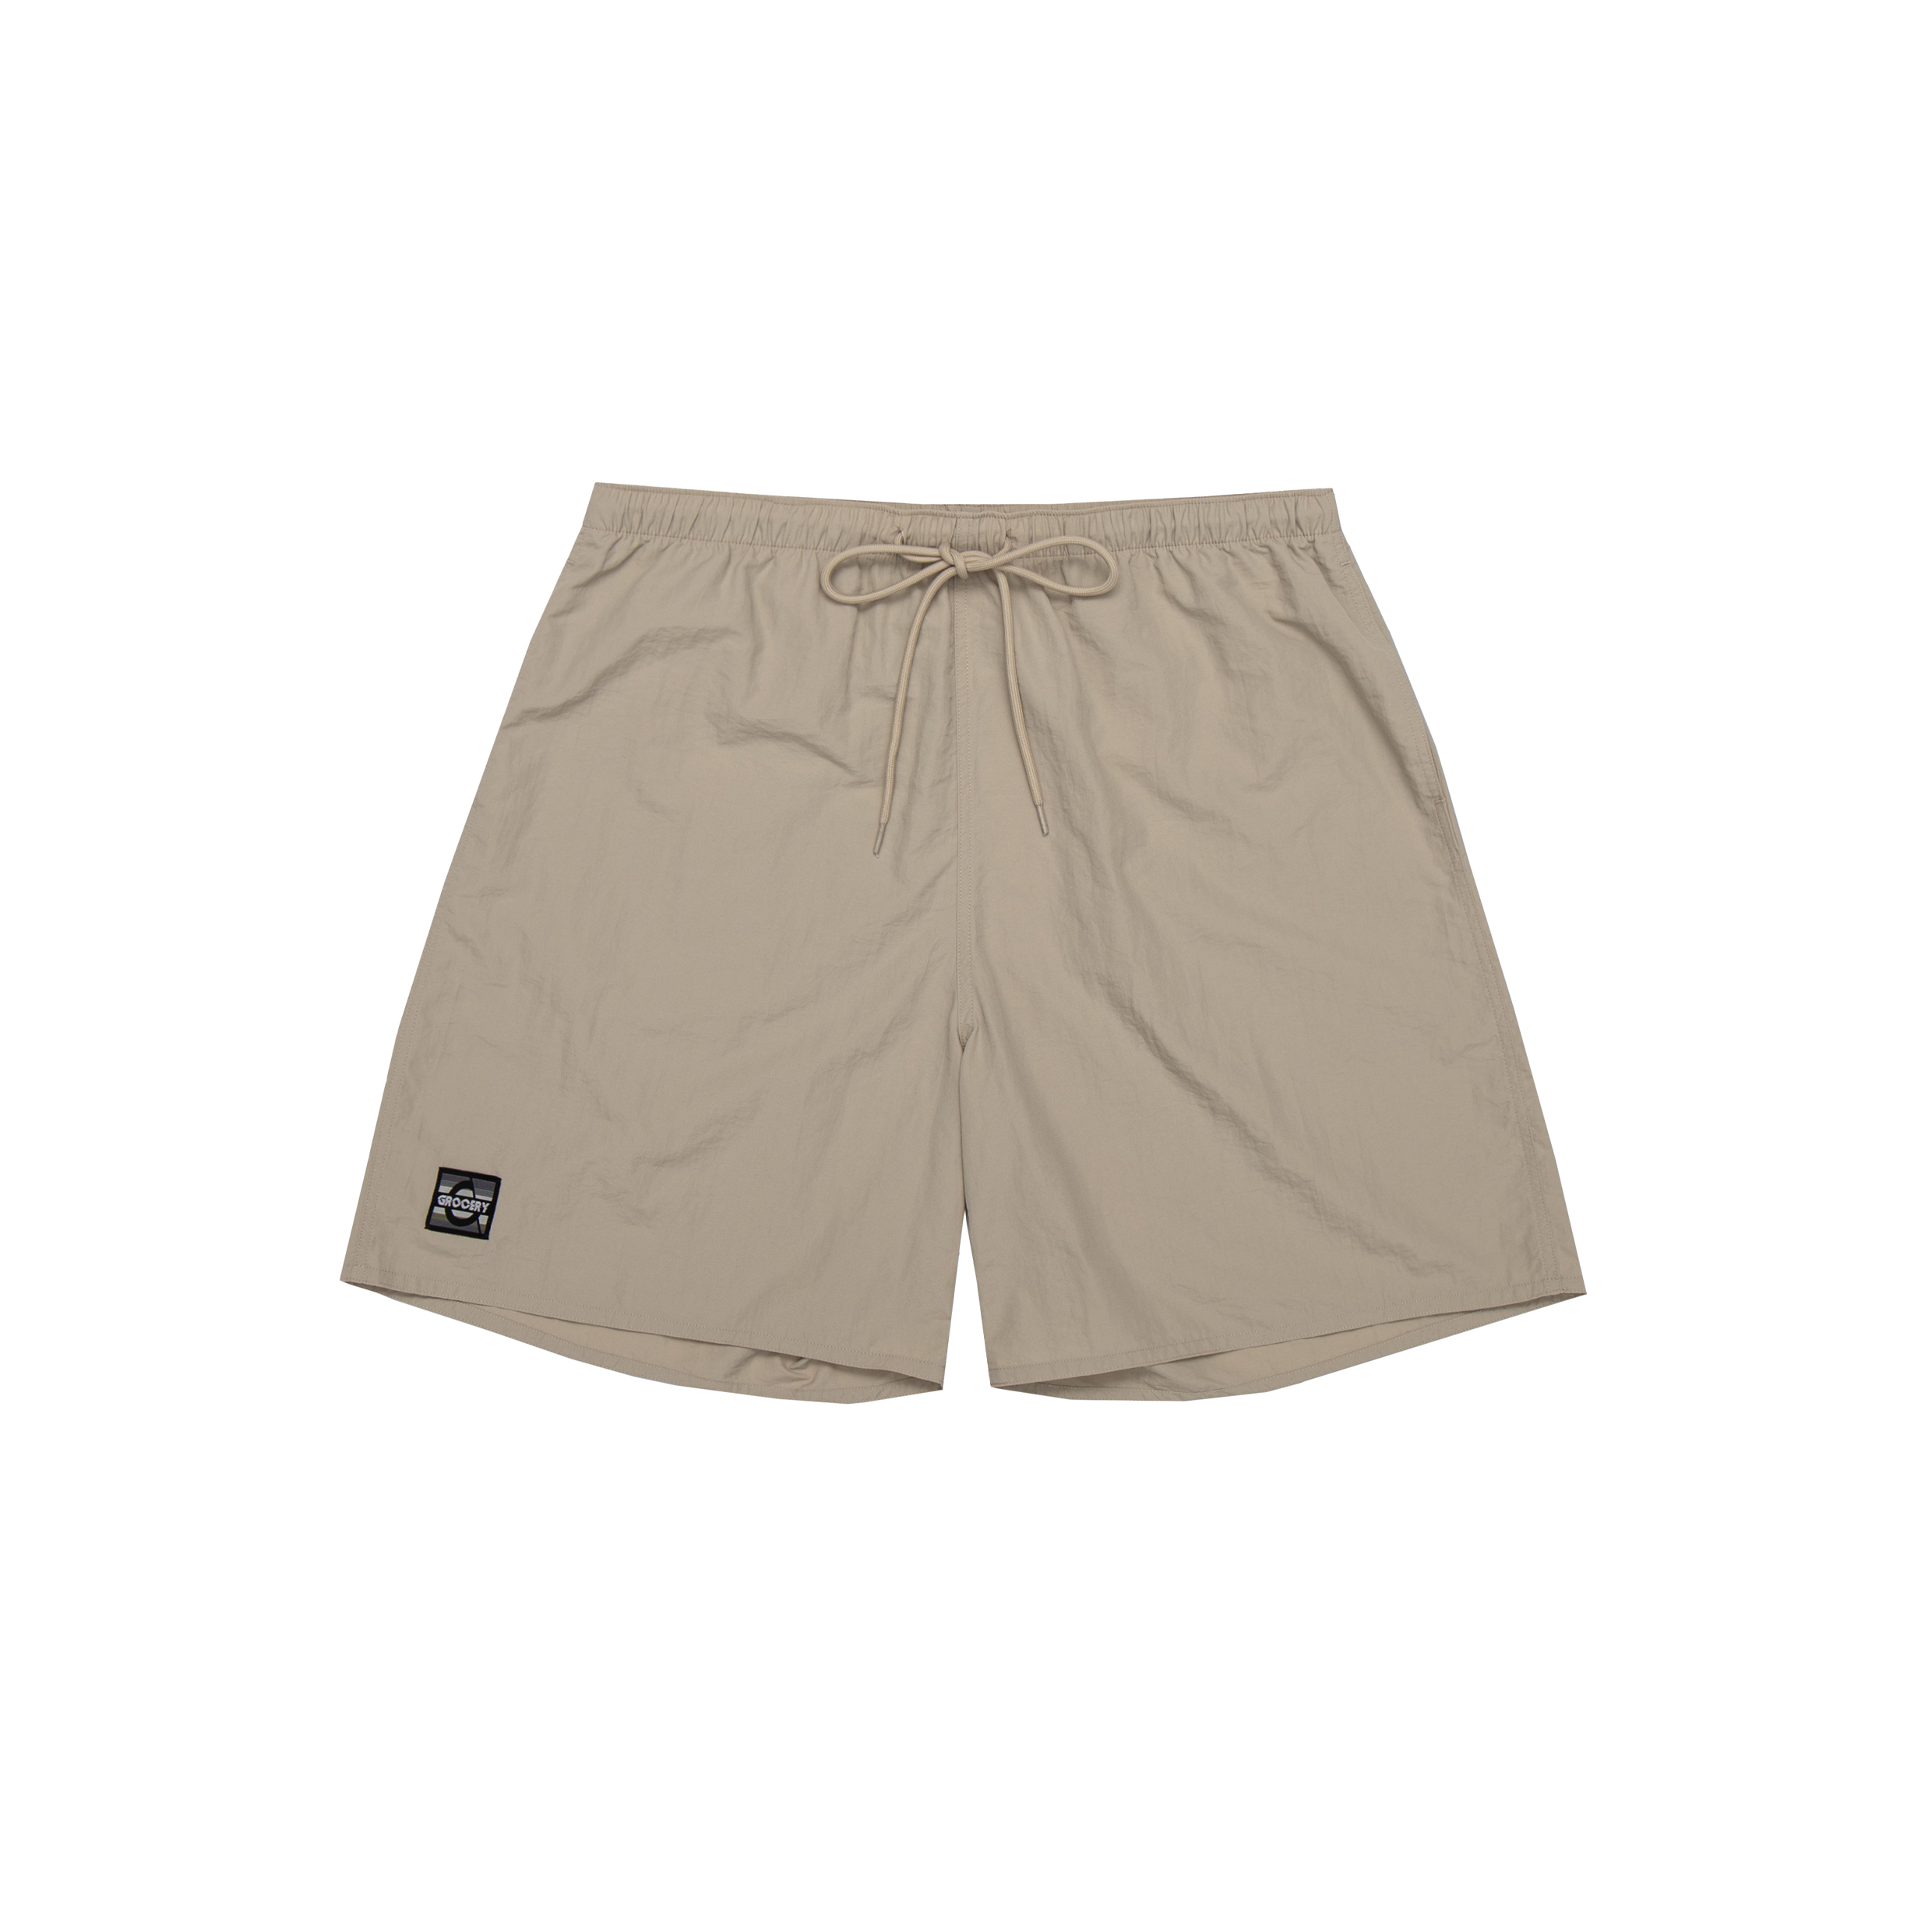 Grocery - SP-007 Daily Nylon Shorts - Khaki